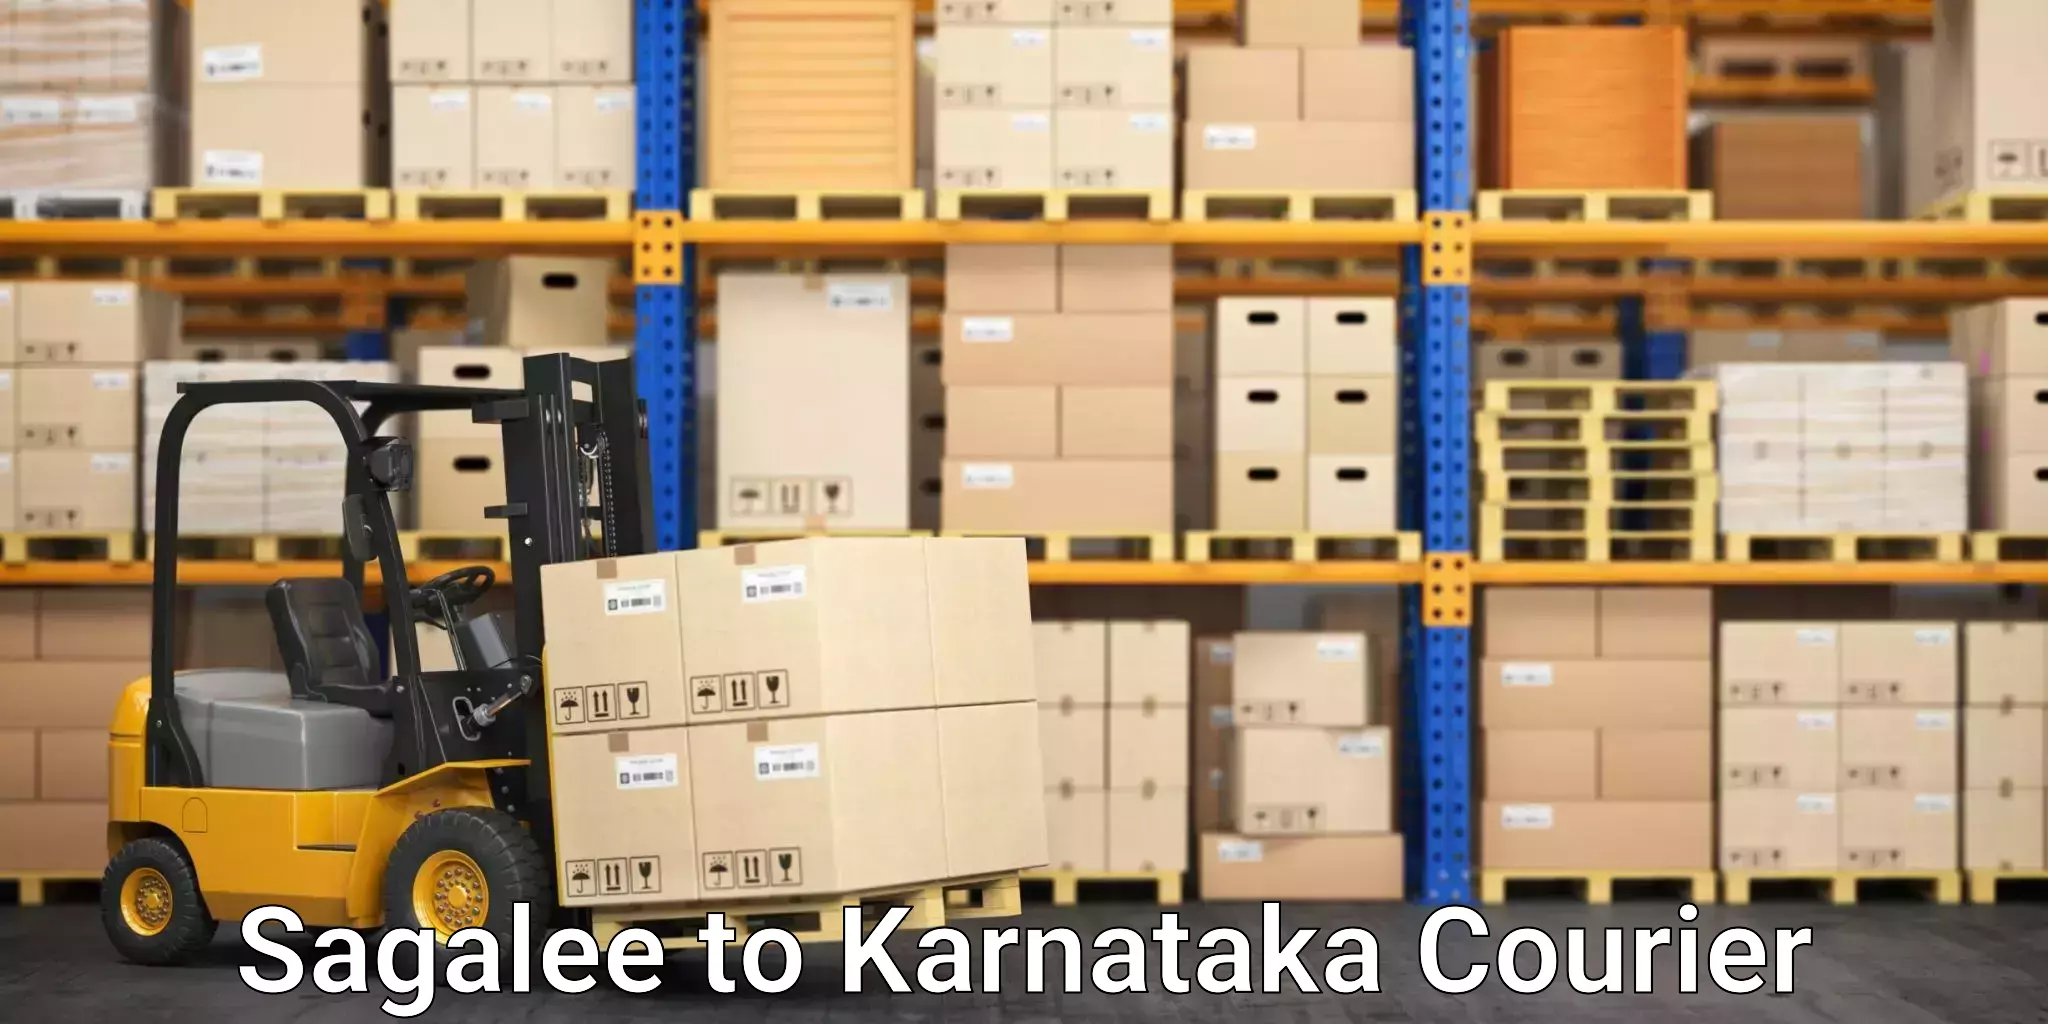 On-demand courier Sagalee to Karnataka